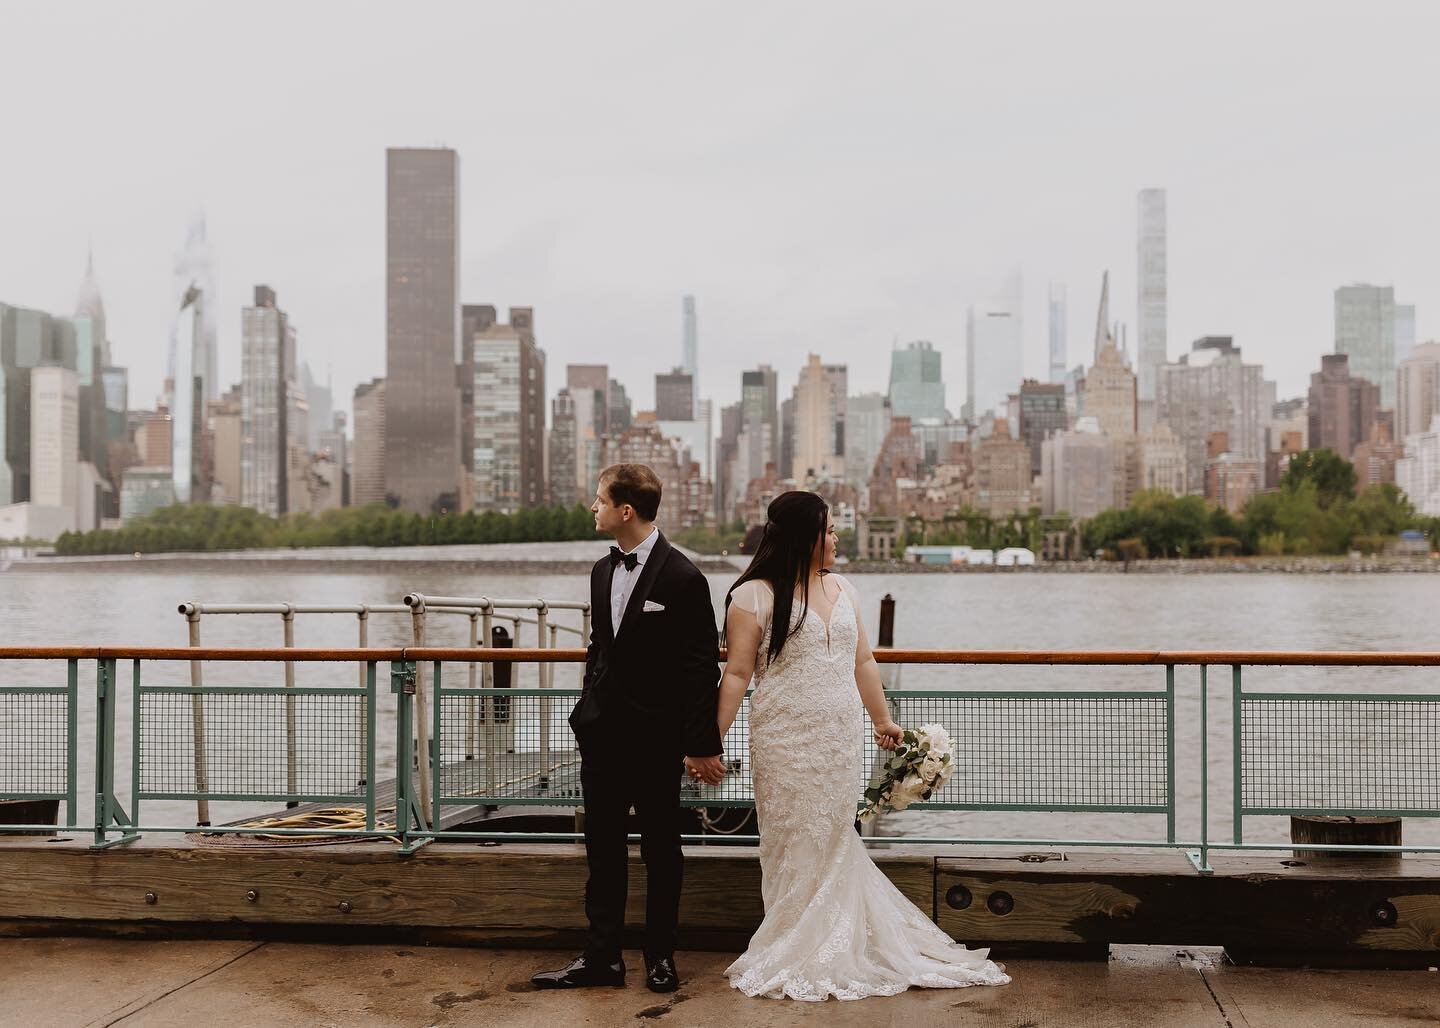 Small snippets of a waterfront New York wedding ❤️&zwj;🔥

Main photographer: @jennacavphoto